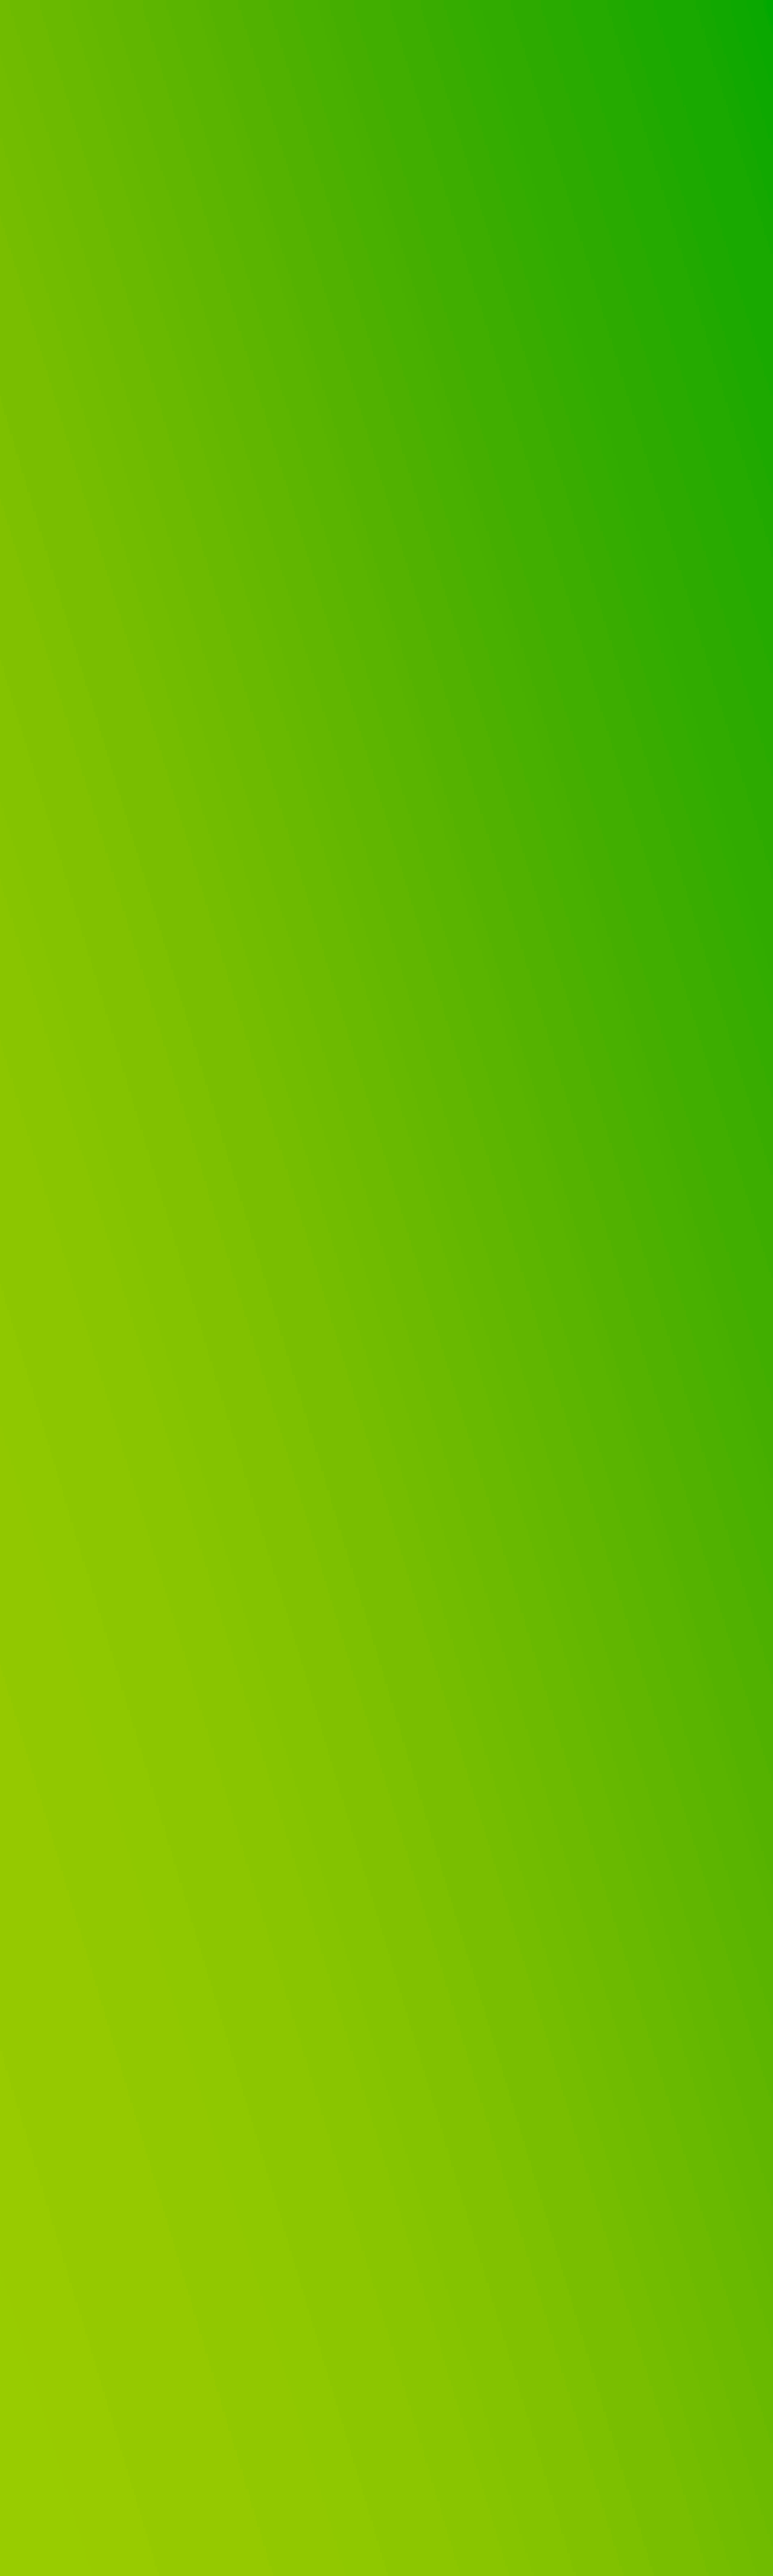 Plain Green Wallpaper Desktop Background